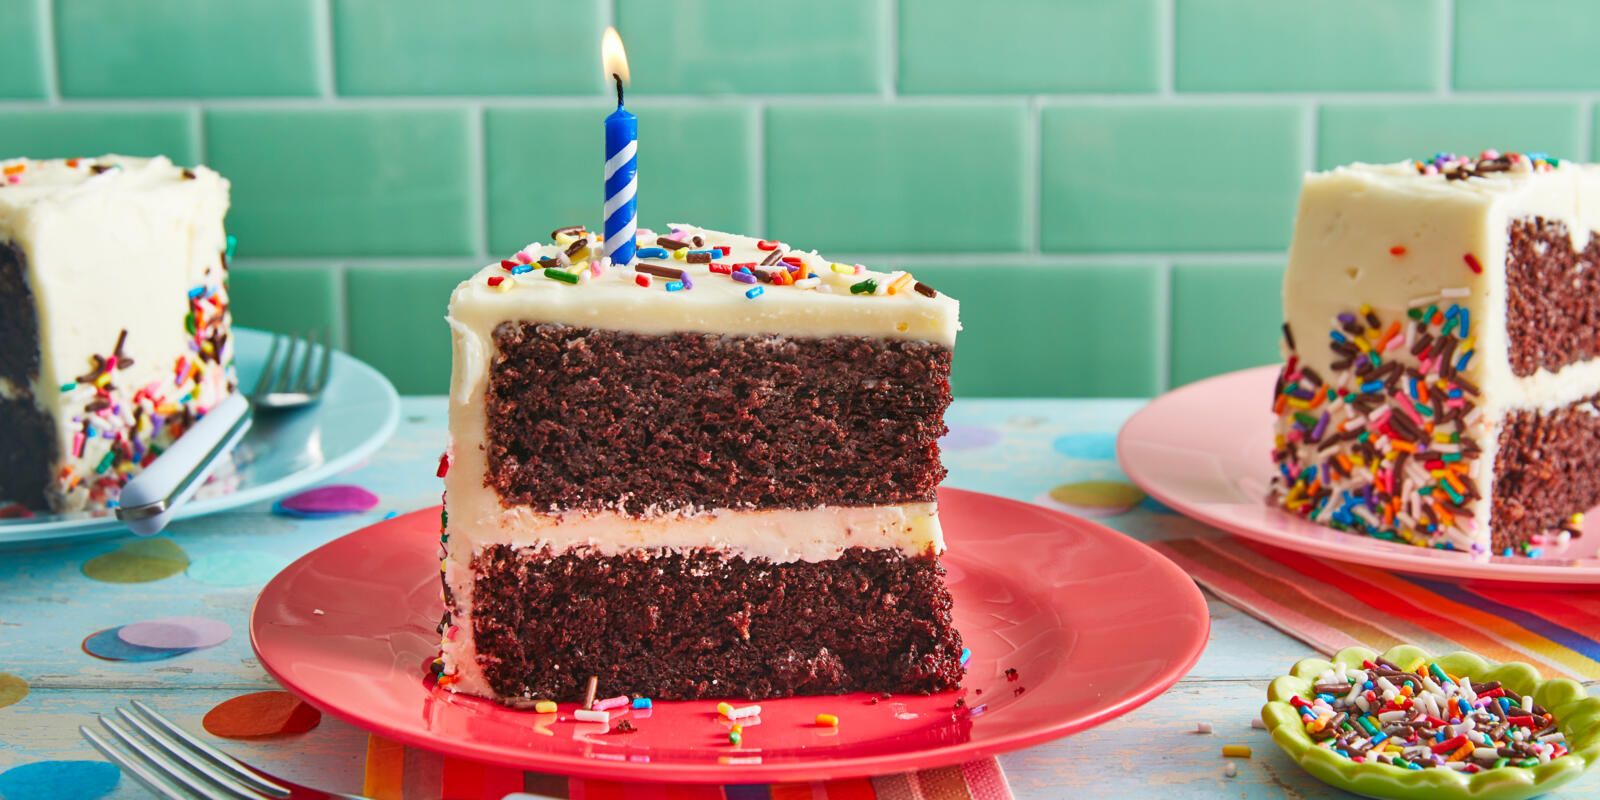 Happy Birthday Cake Images | Birthday Cake Wishes | Wishes Pics